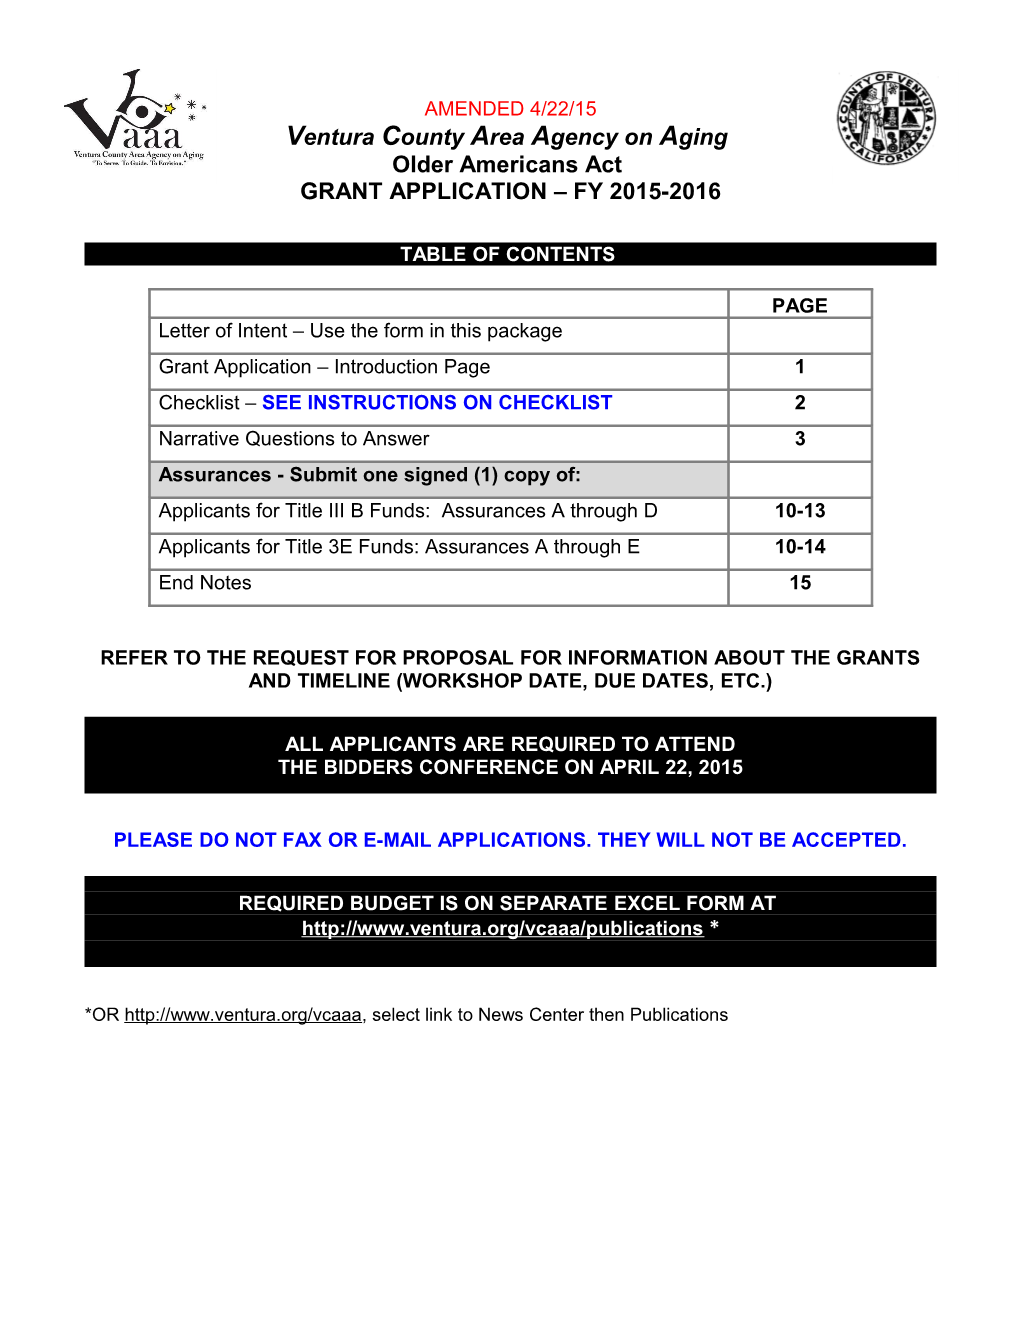 2006-07 RFP New Grants Application